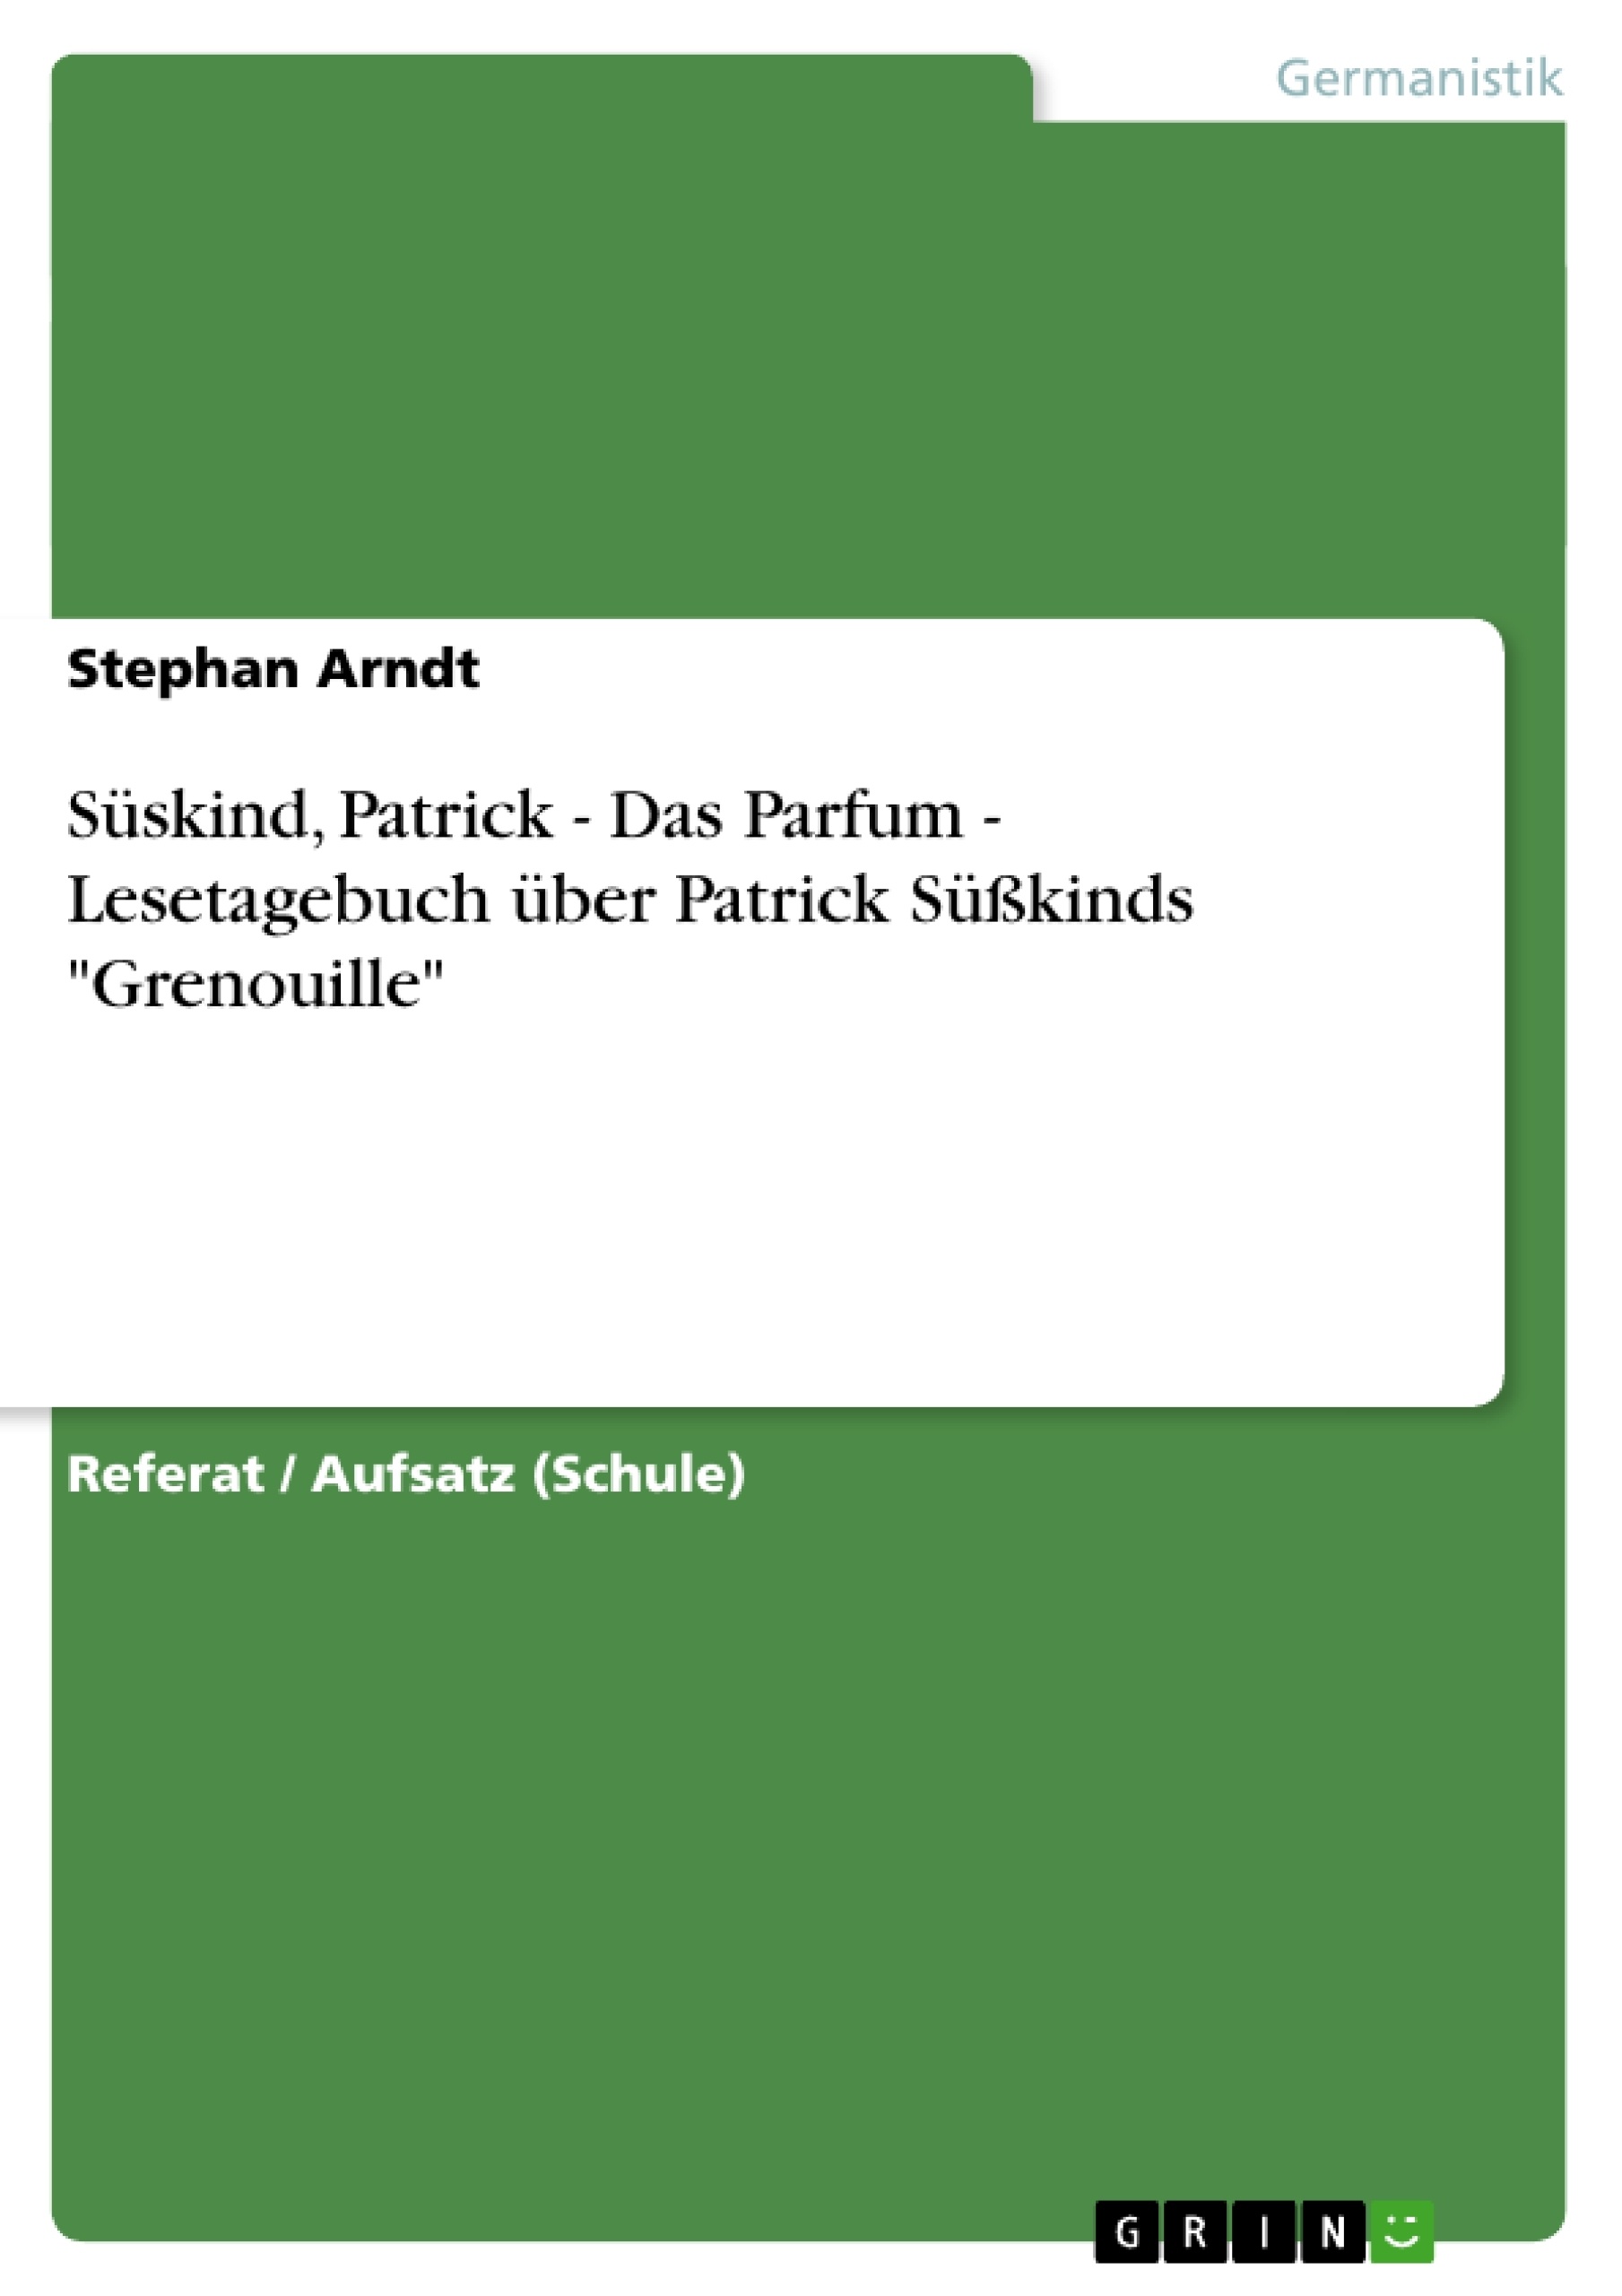 Title: Süskind, Patrick - Das Parfum - Lesetagebuch über Patrick Süßkinds "Grenouille"